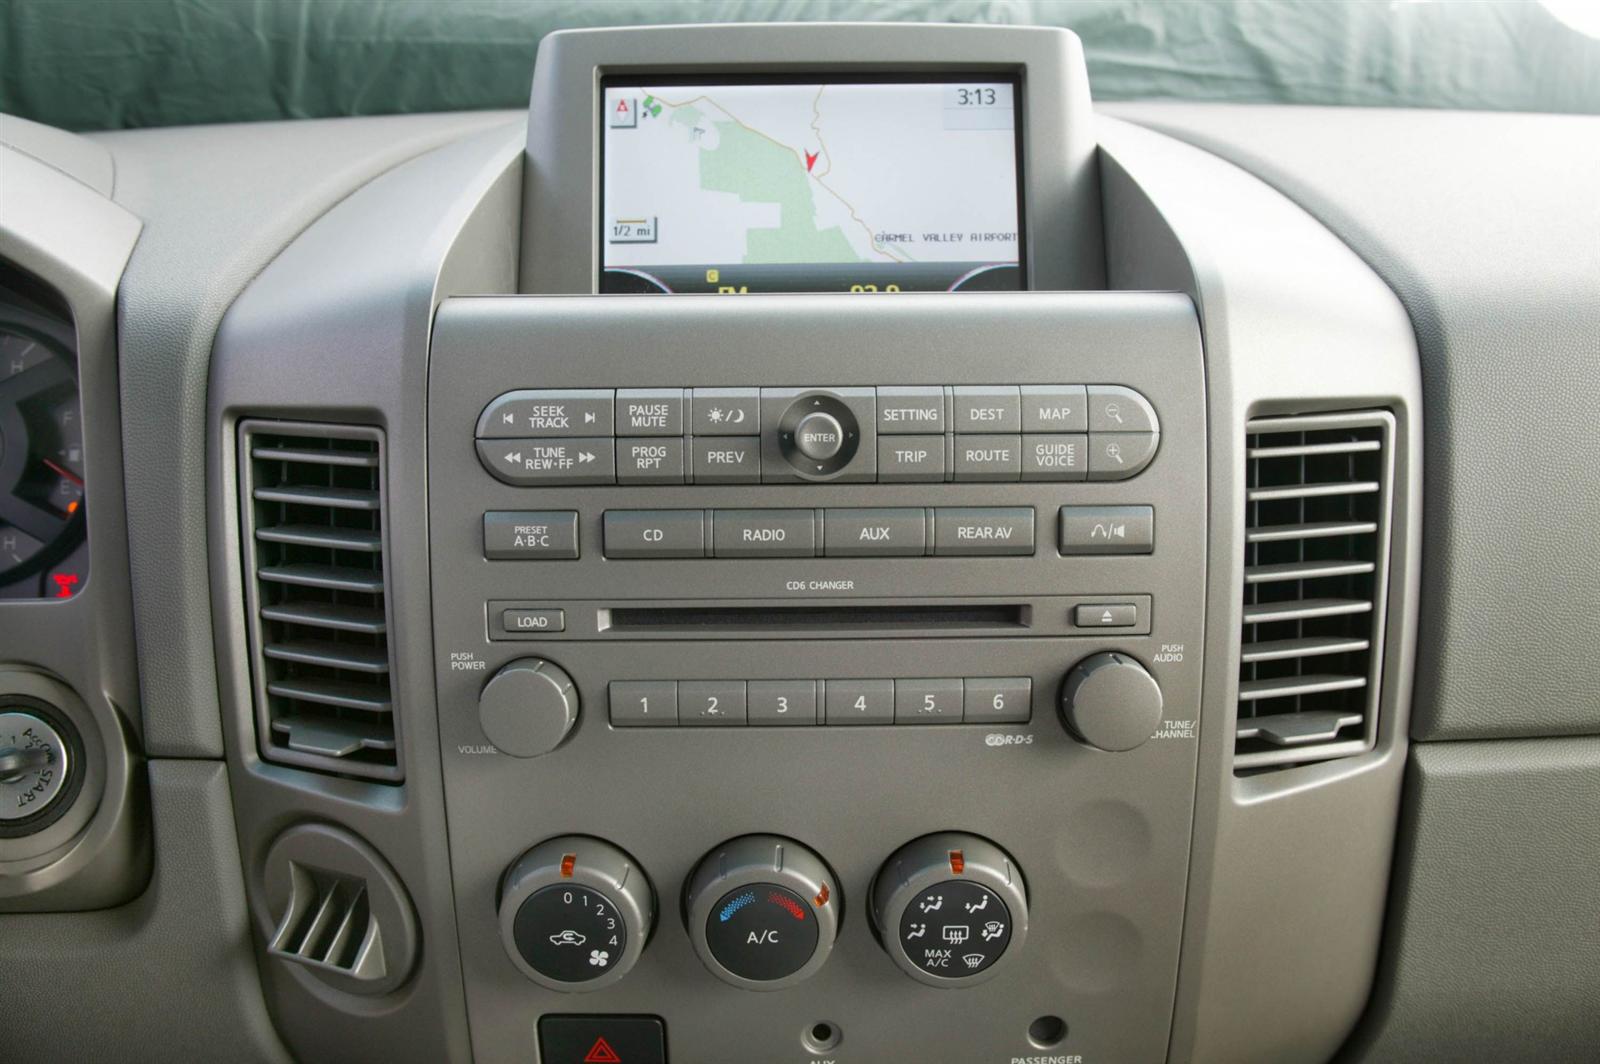 2007 Nissan Titan